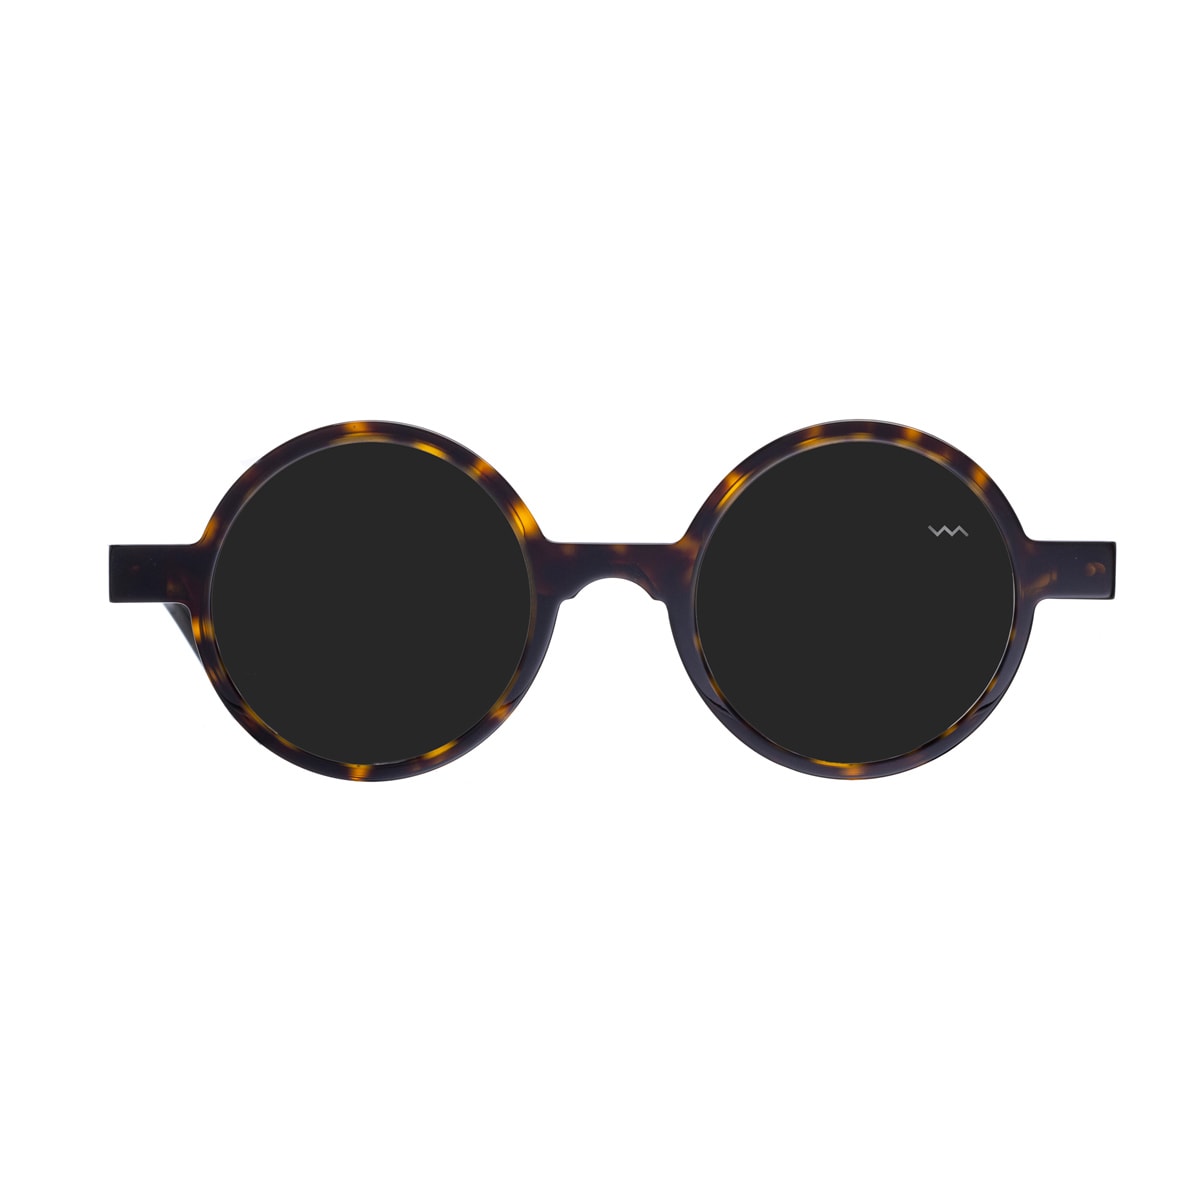 Wl0006 White Label Havana Sunglasses